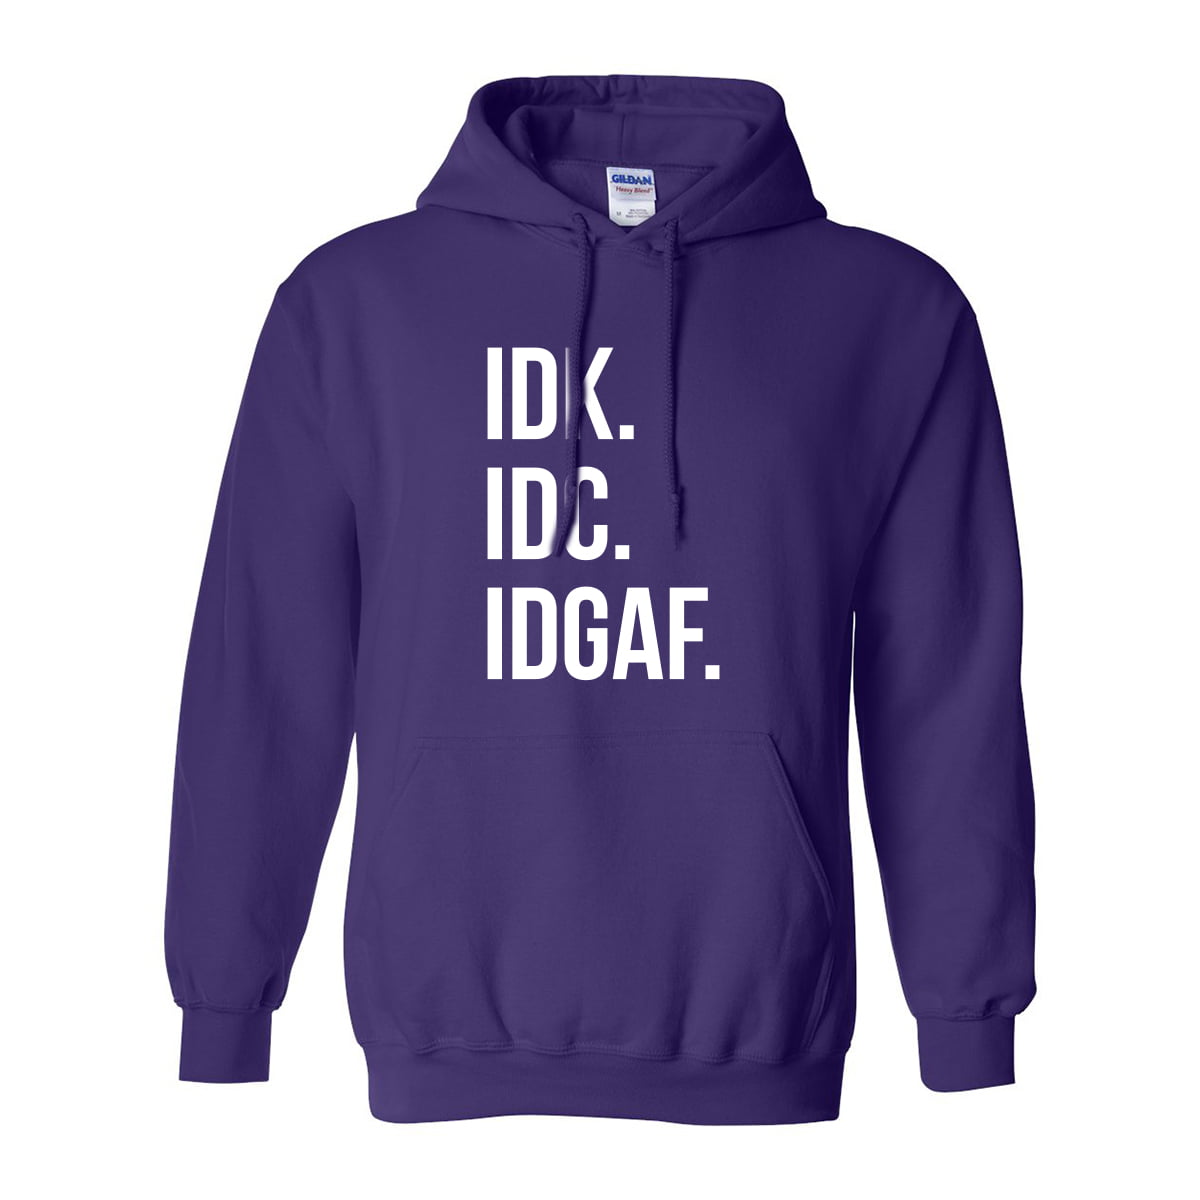 Adult Hooded Sweatshirt zerogravitee IDK.IDC.IDGAF 